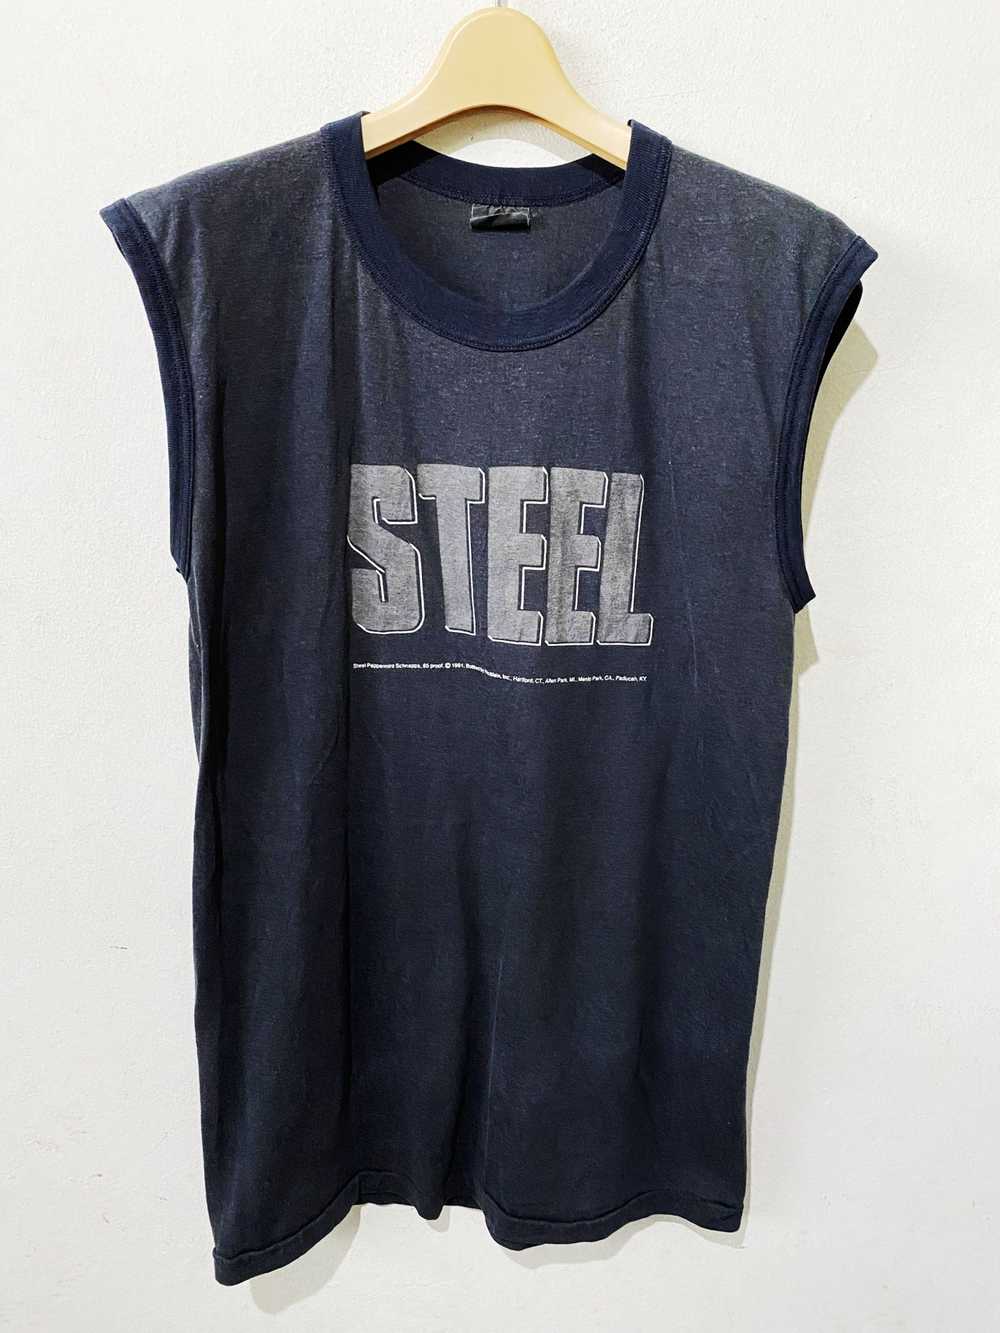 Vintage Vintage 1981 Steel Shirt - image 1